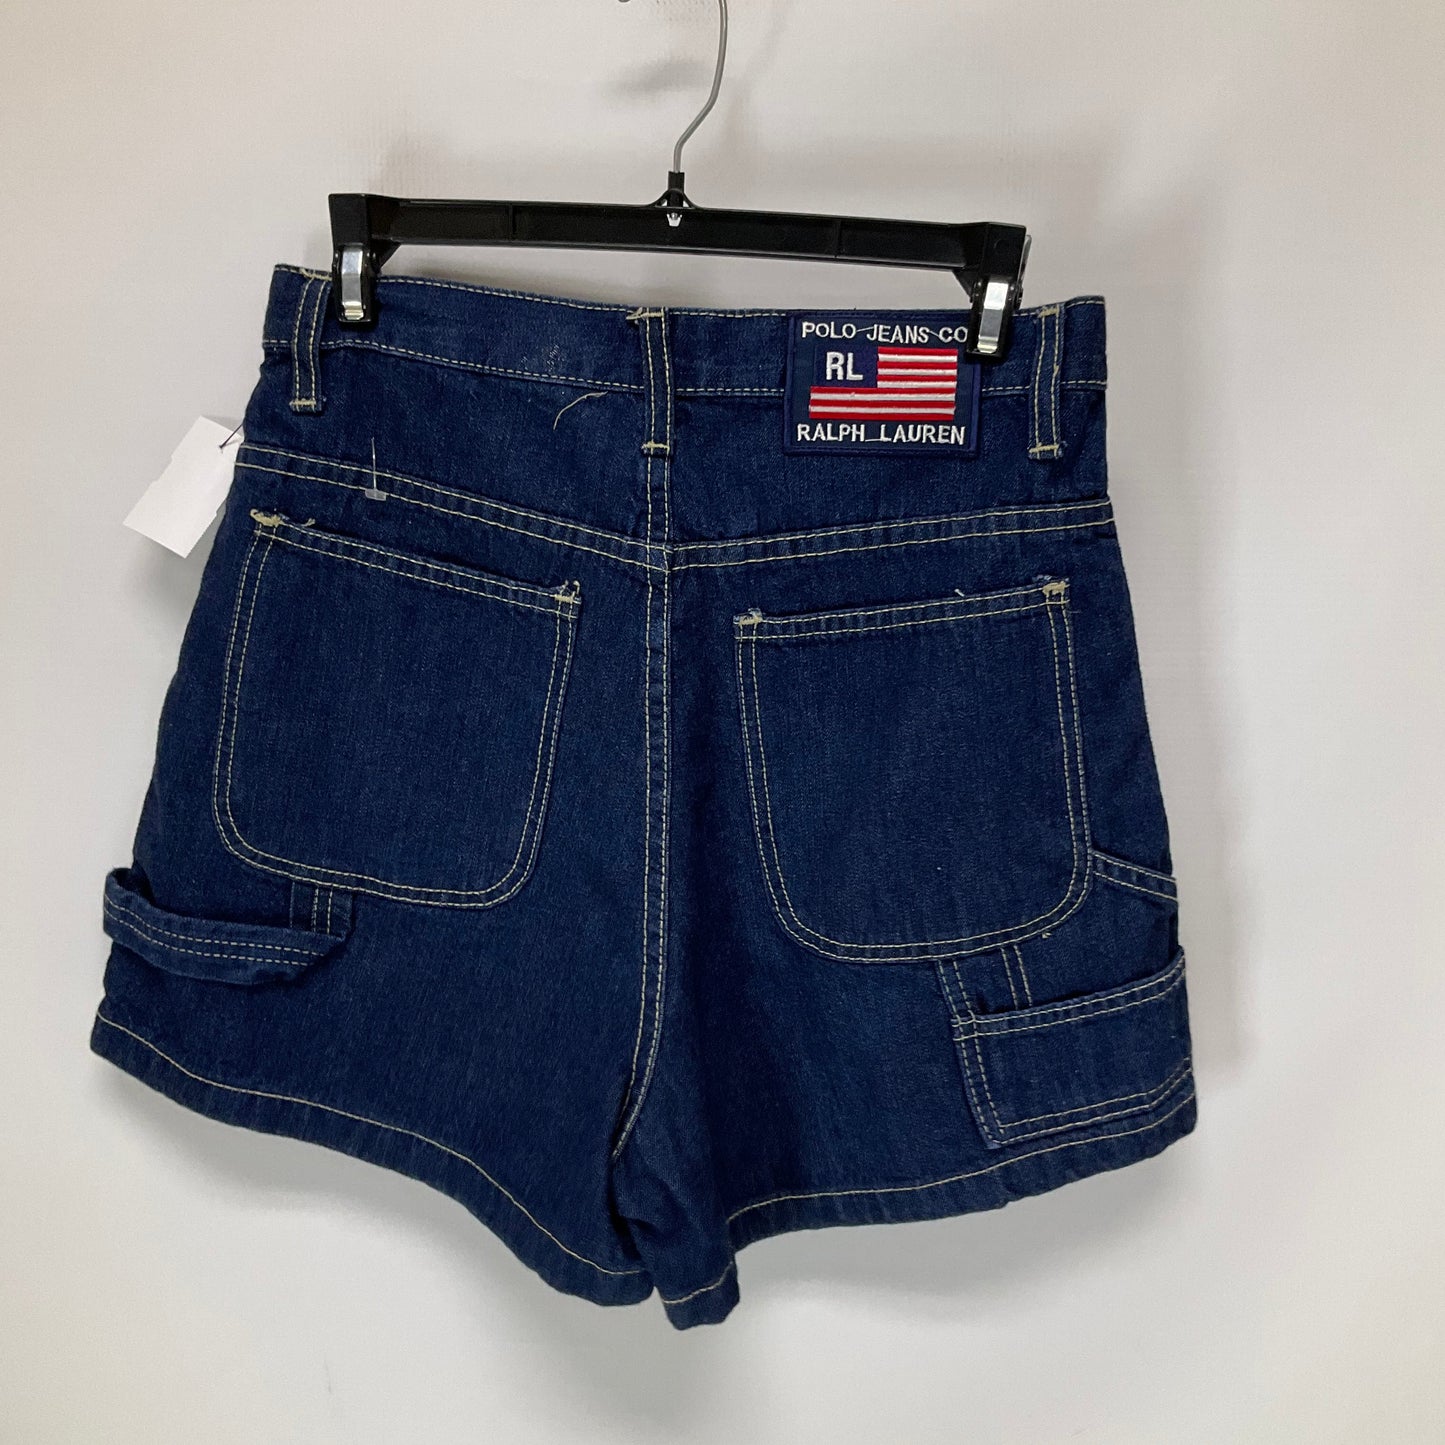 Blue Denim Shorts Polo Ralph Lauren, Size 10